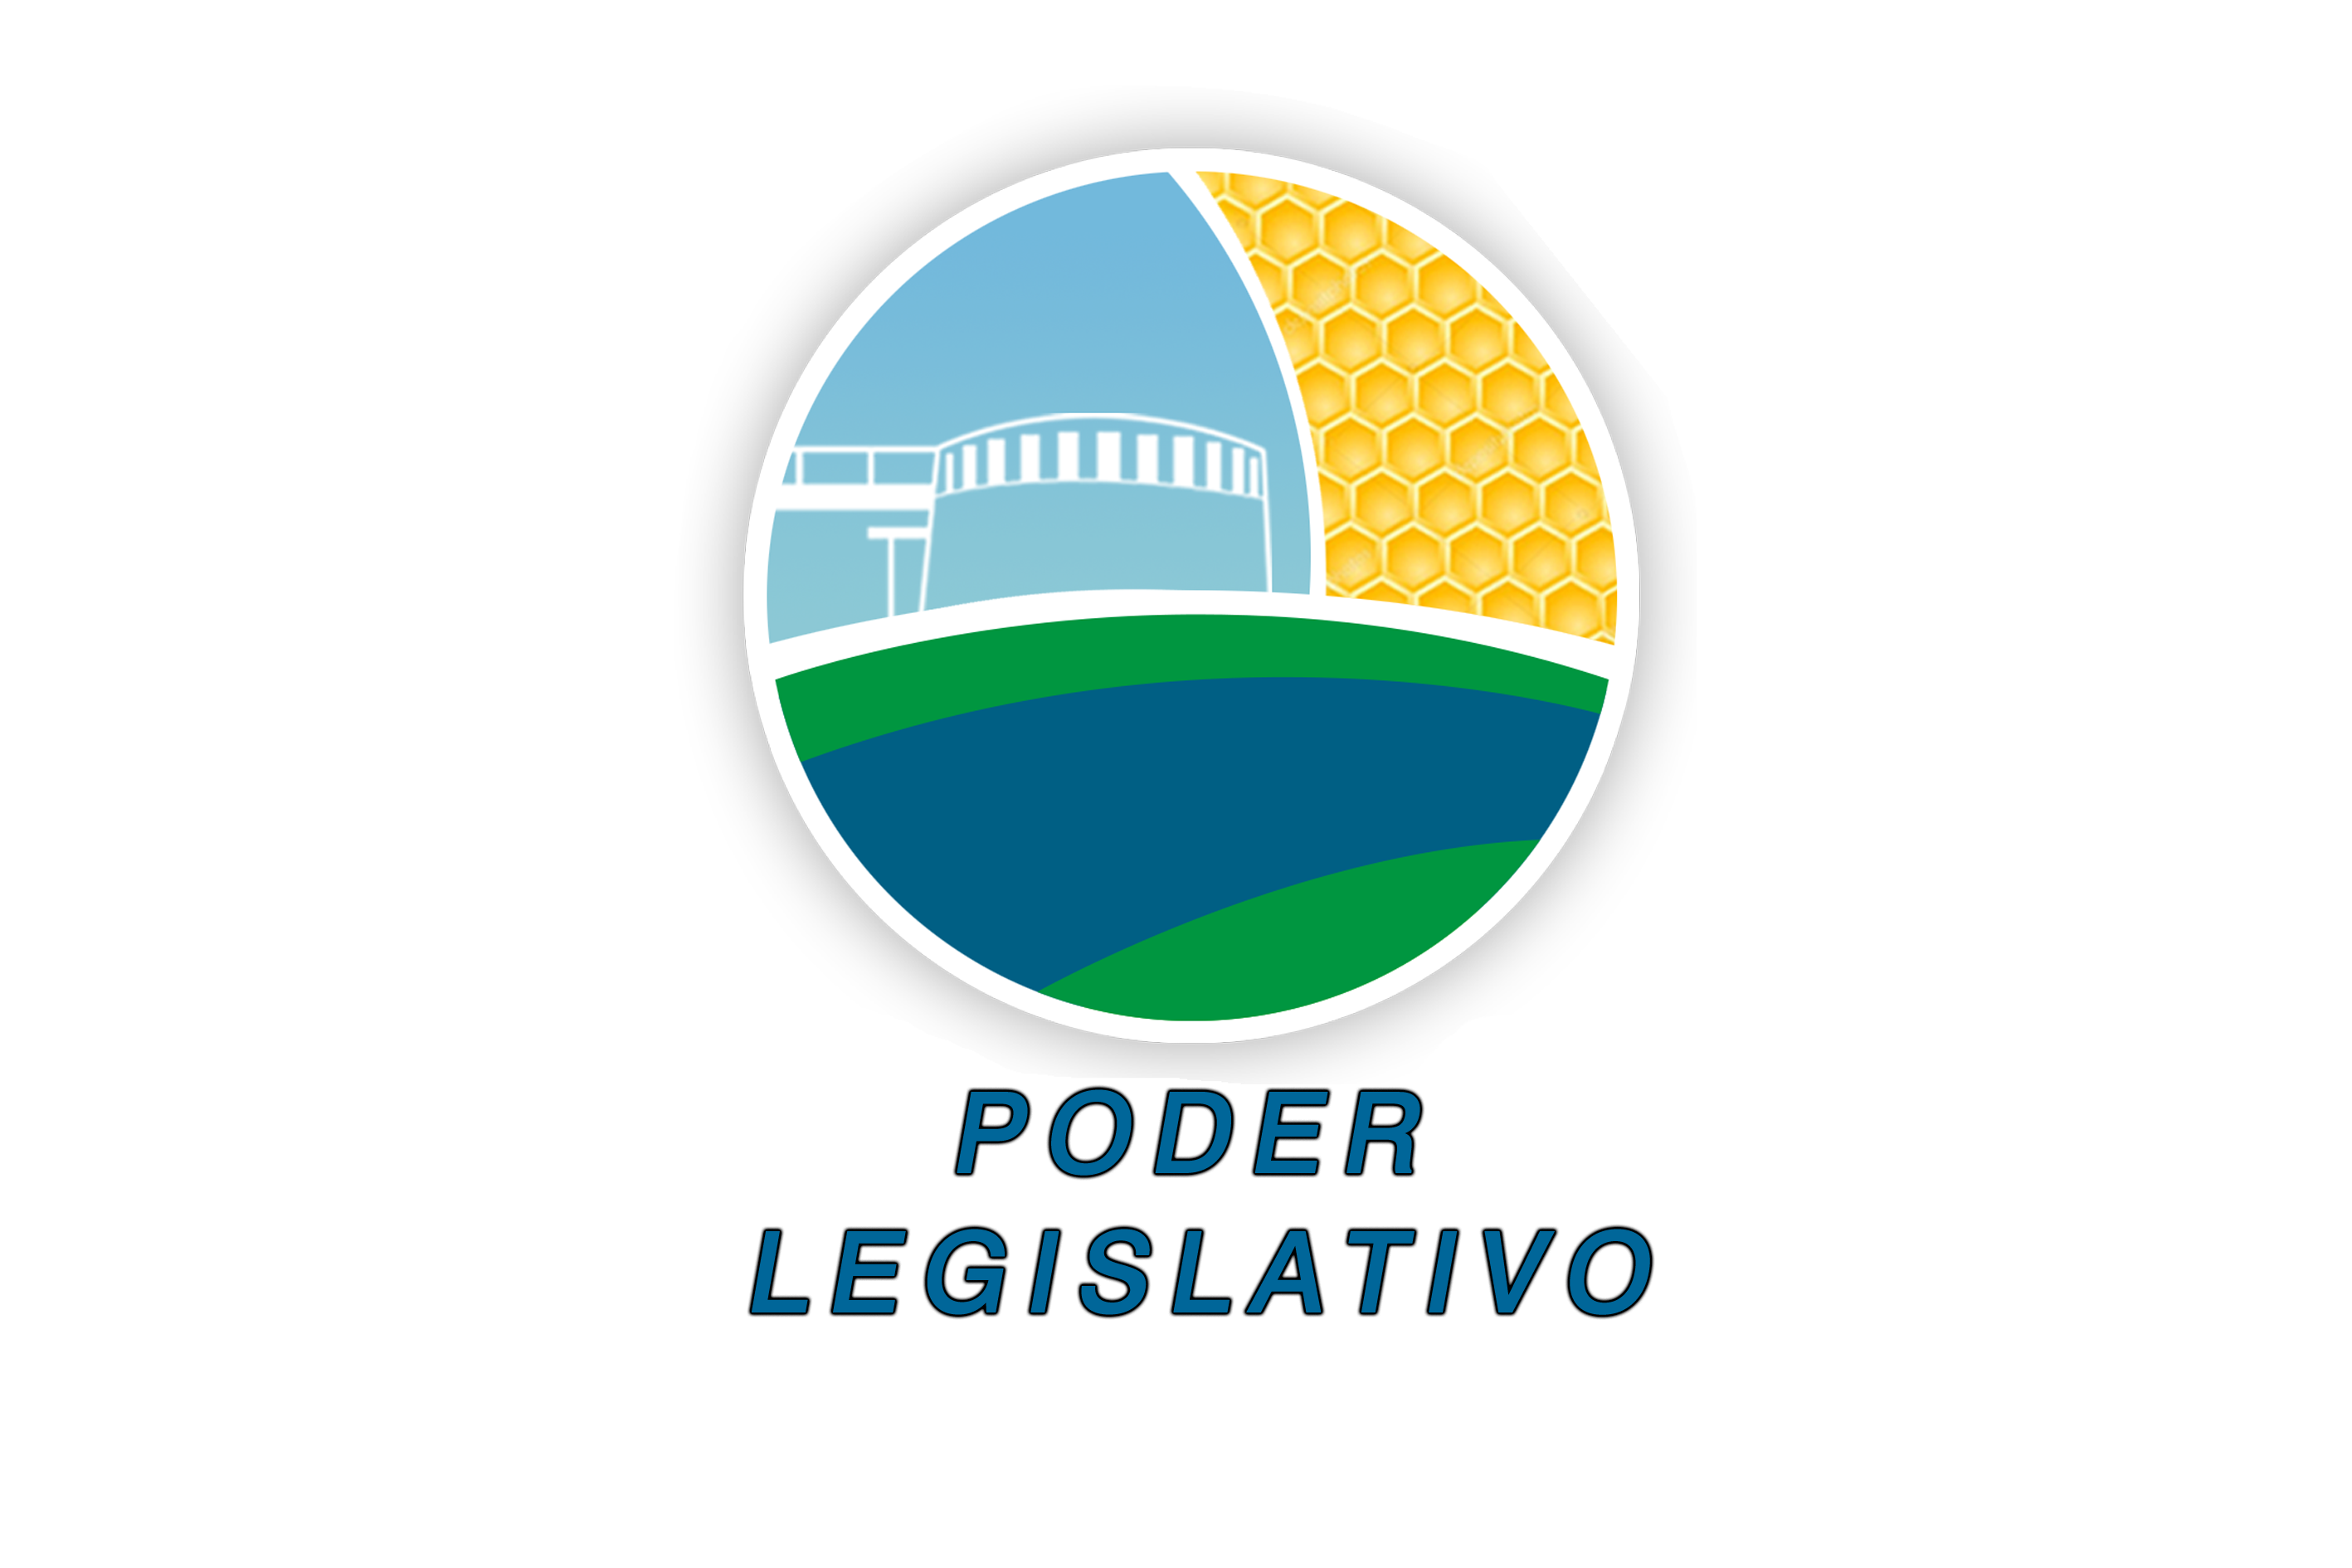 logo legislativo